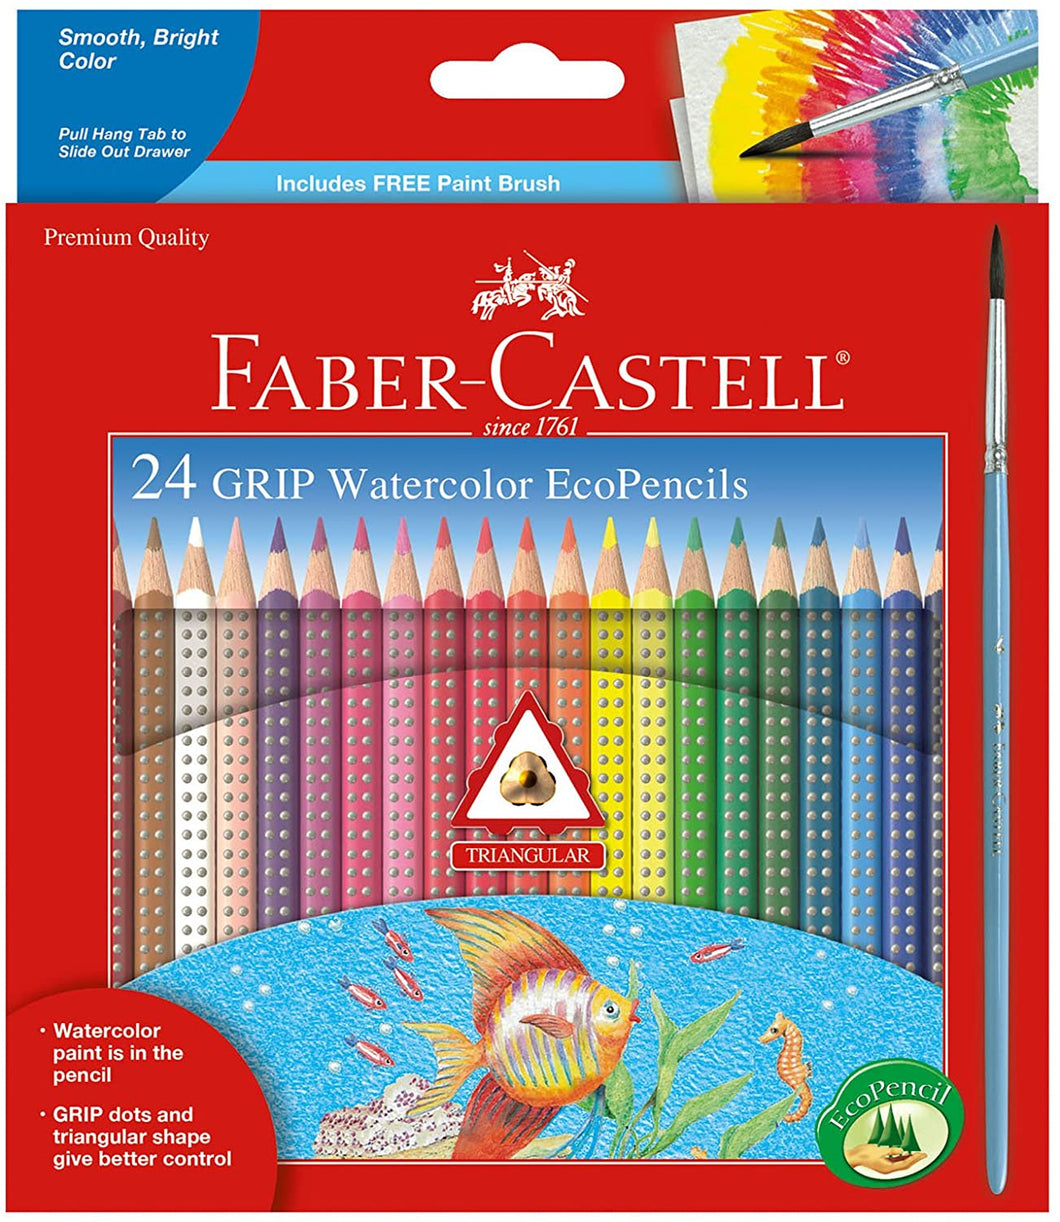 Faber-Castell Grip Watercolor EcoPencils - 12 Water Color Pencils